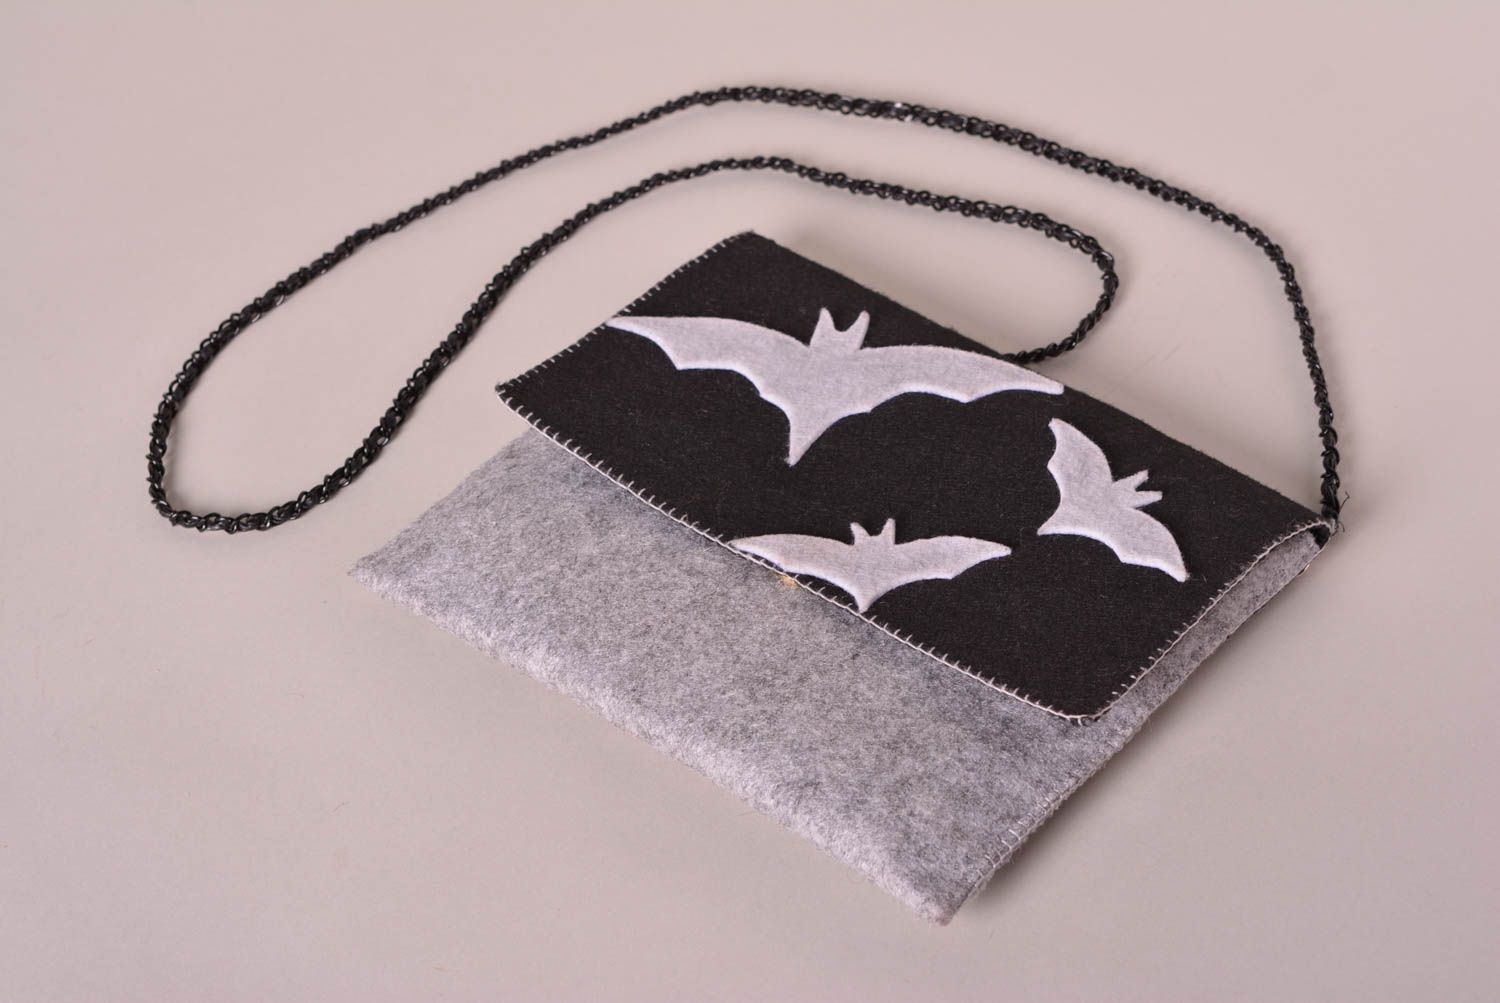 Unusual handmade purse designs beautiful felt wallet accessories for girls photo 3